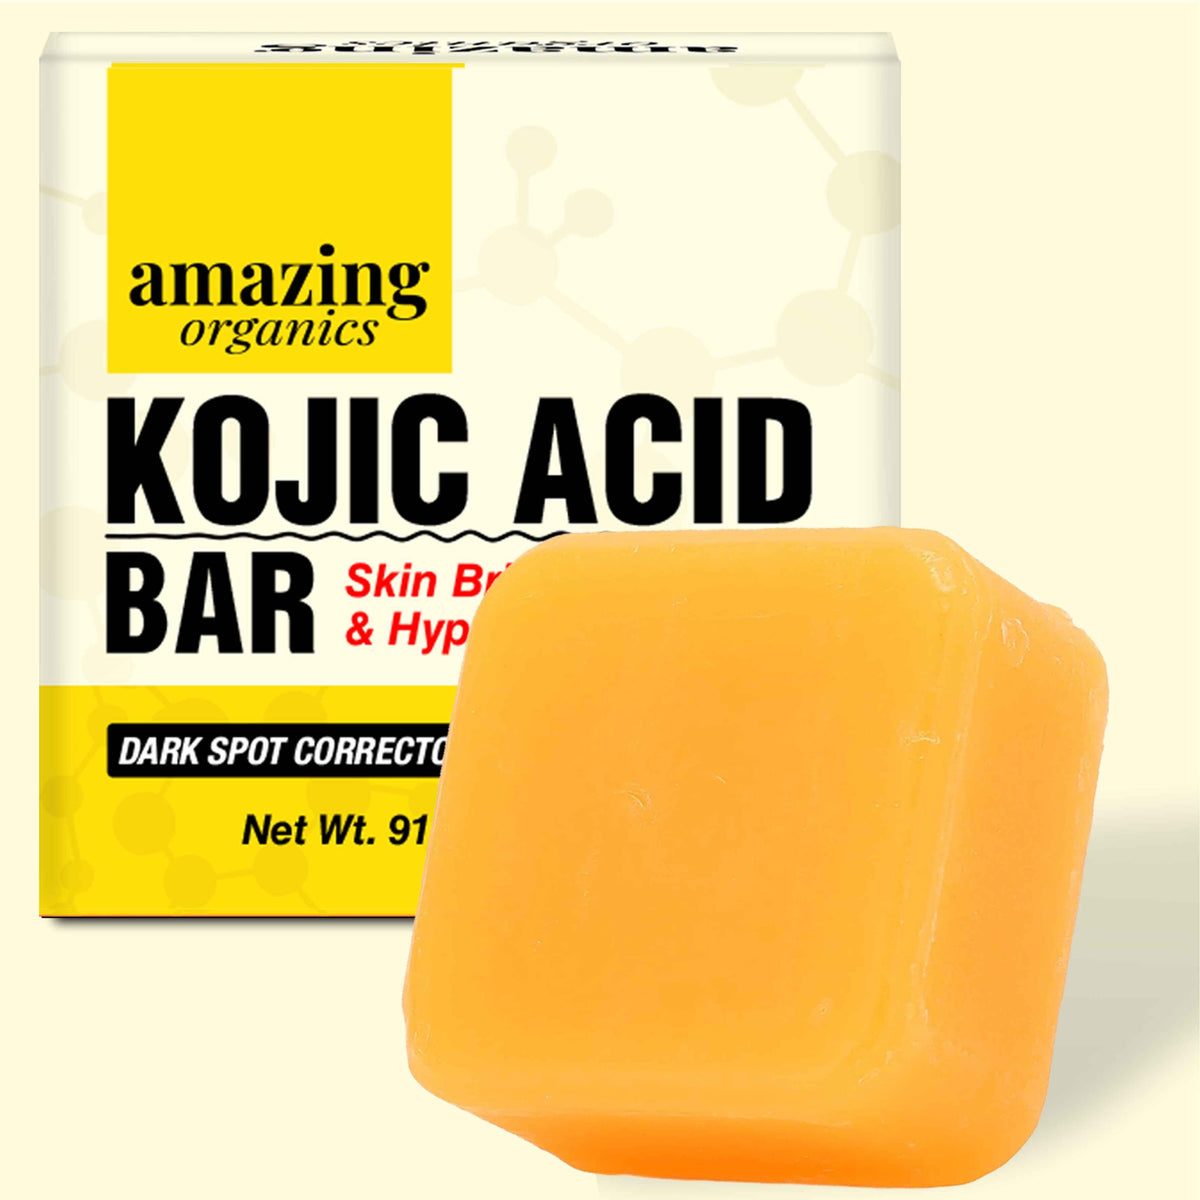 Kojic Acid Bar - Skin Brightening